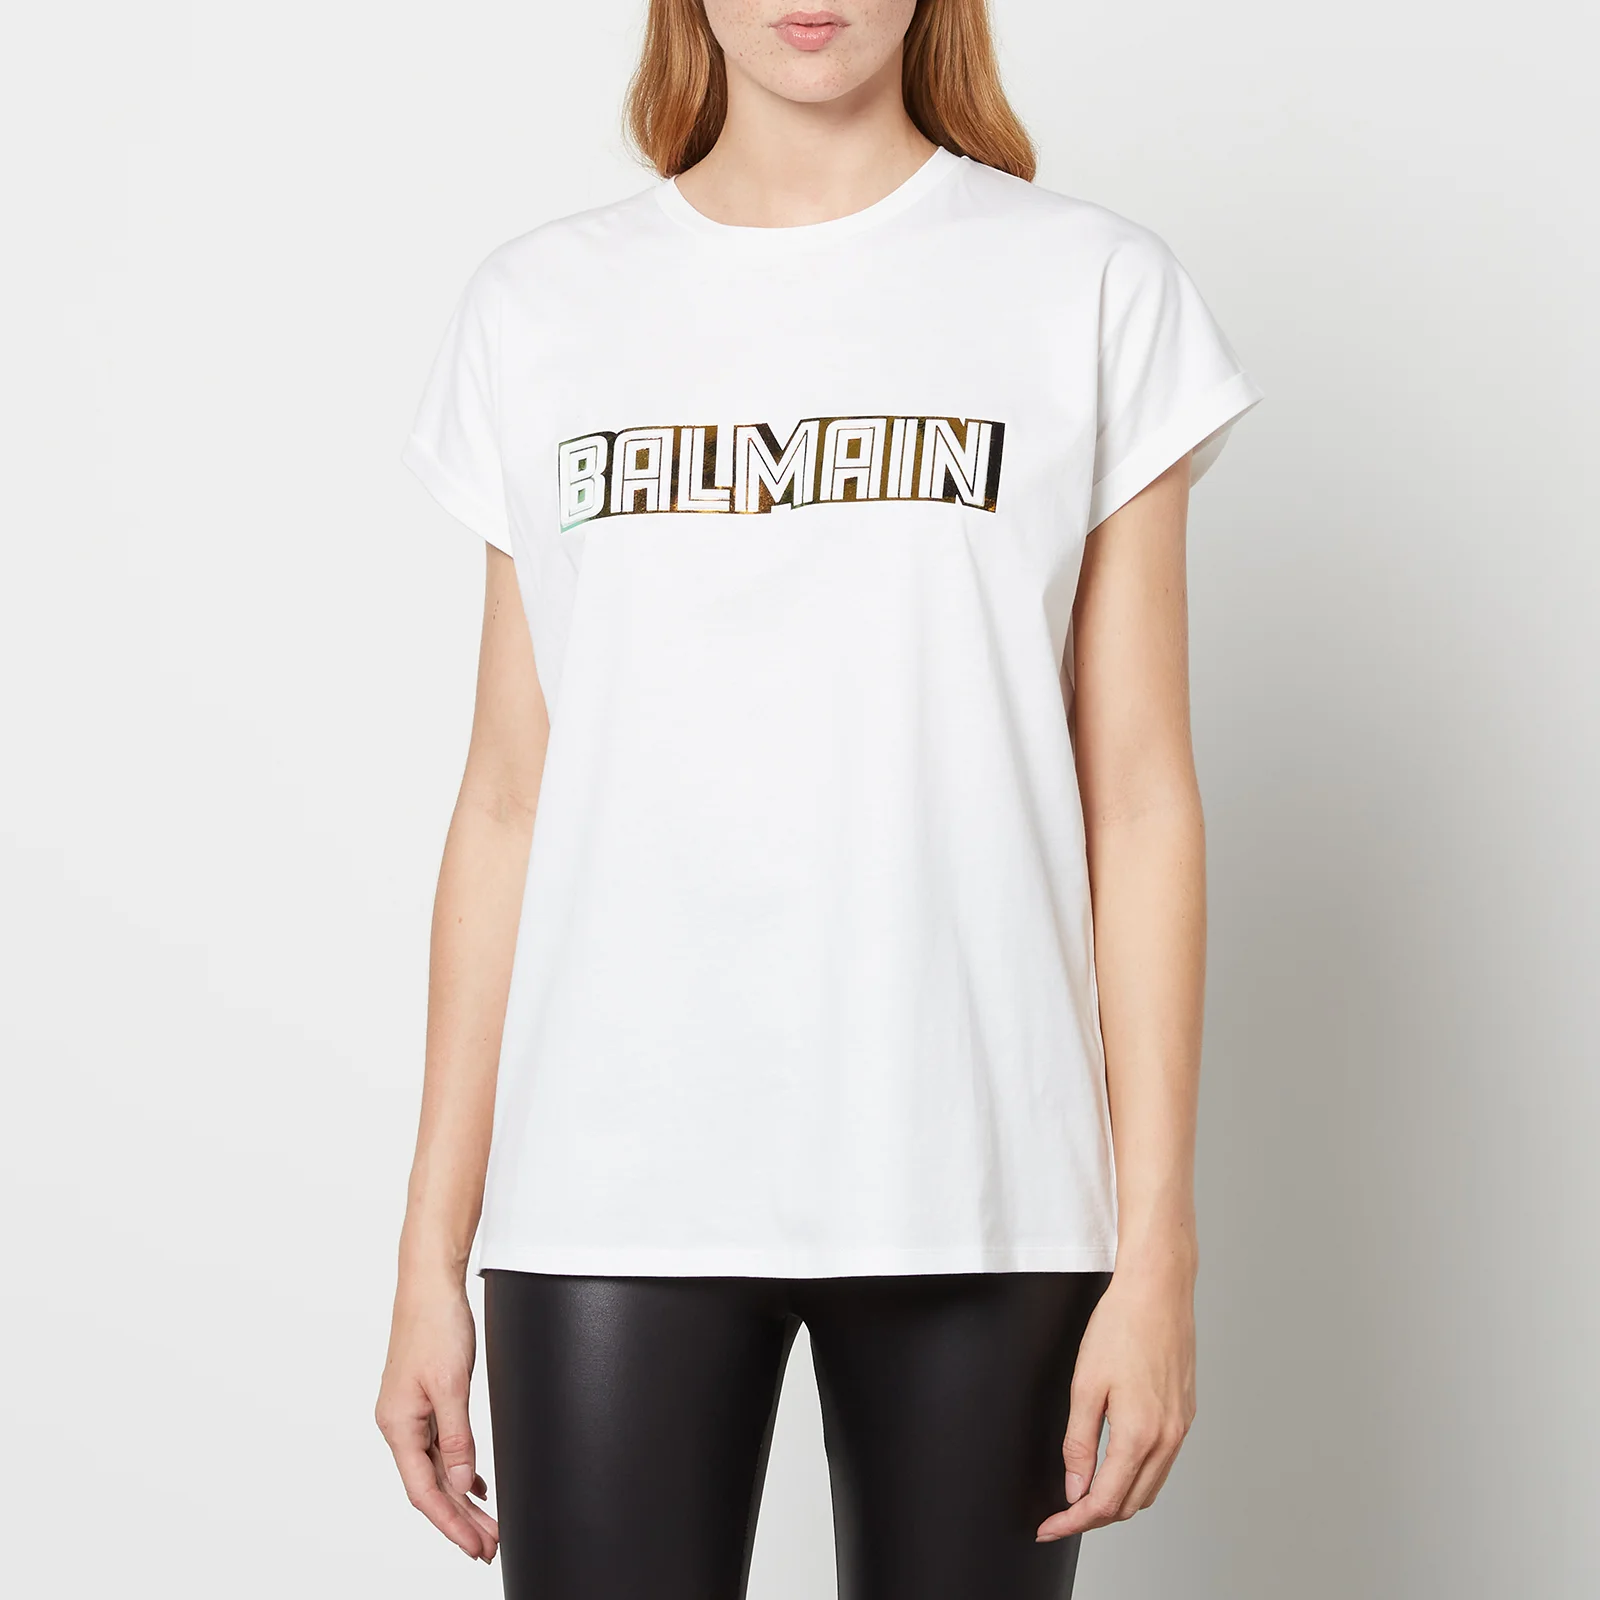 Balmain Women's Metallic Embossed T-Shirt - White/Gold Image 1